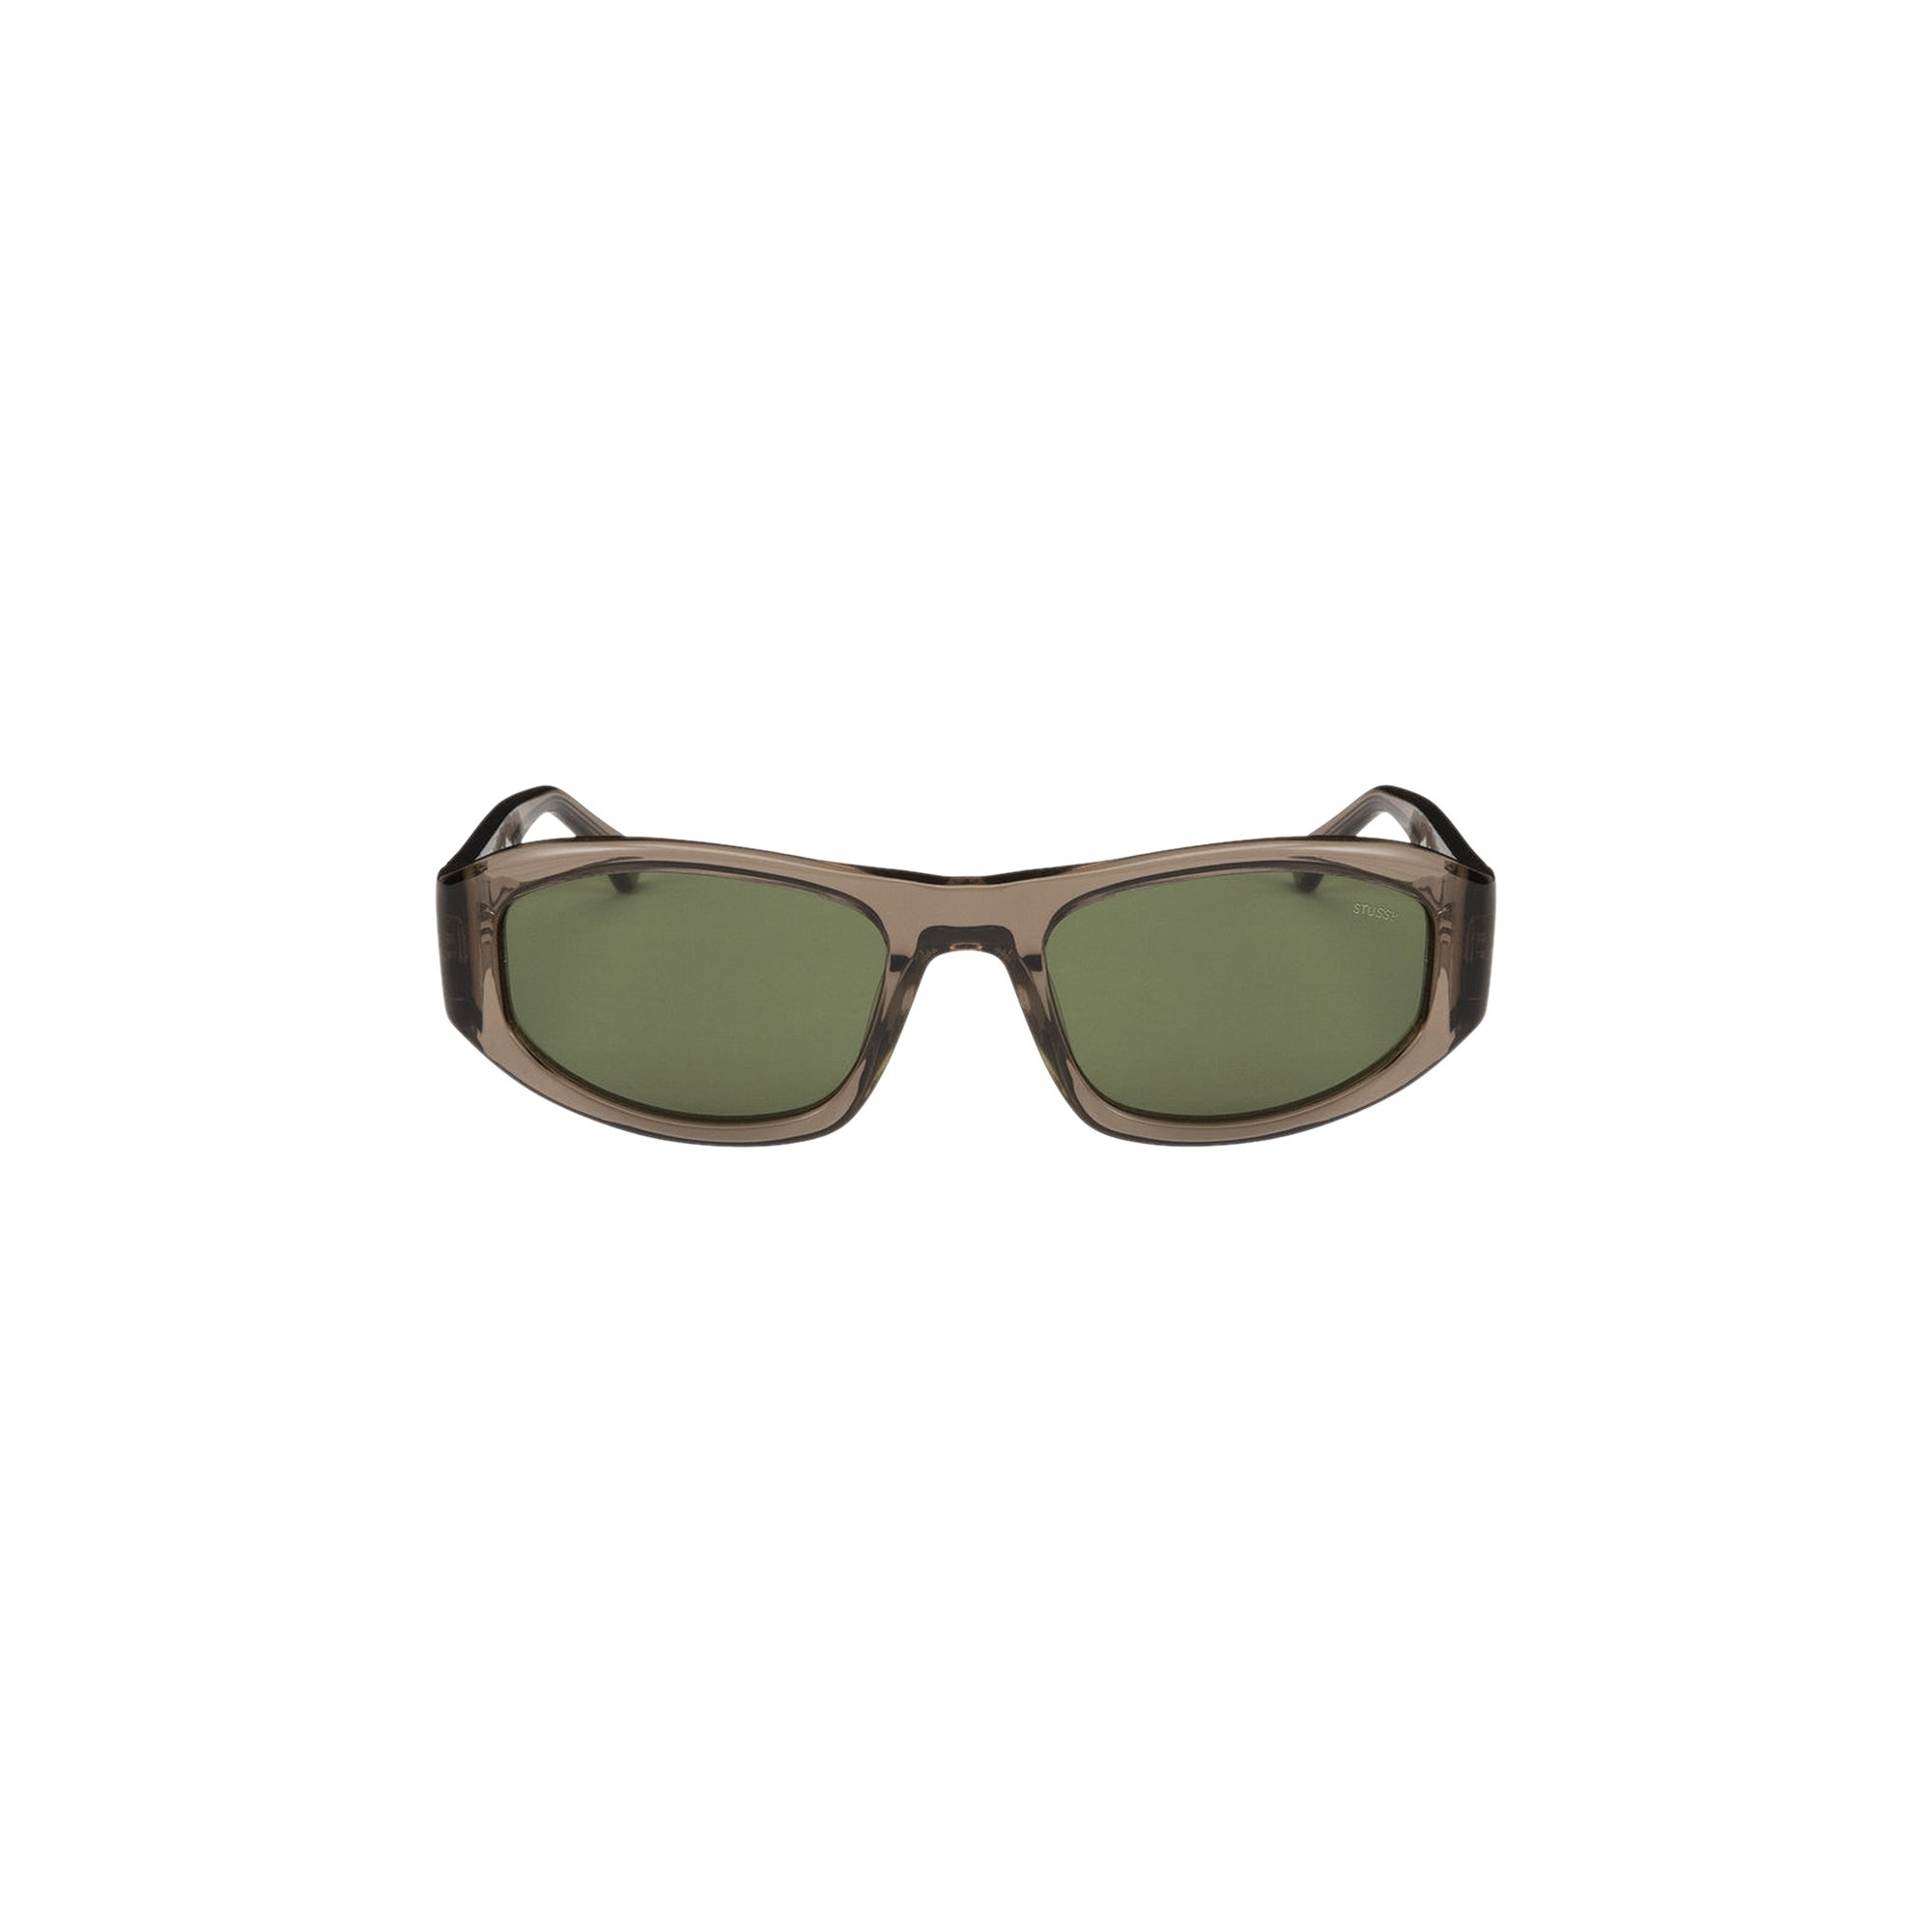 Buy Stussy Landon Sunglasses 'Light Brown/Dark Green' - 338241 